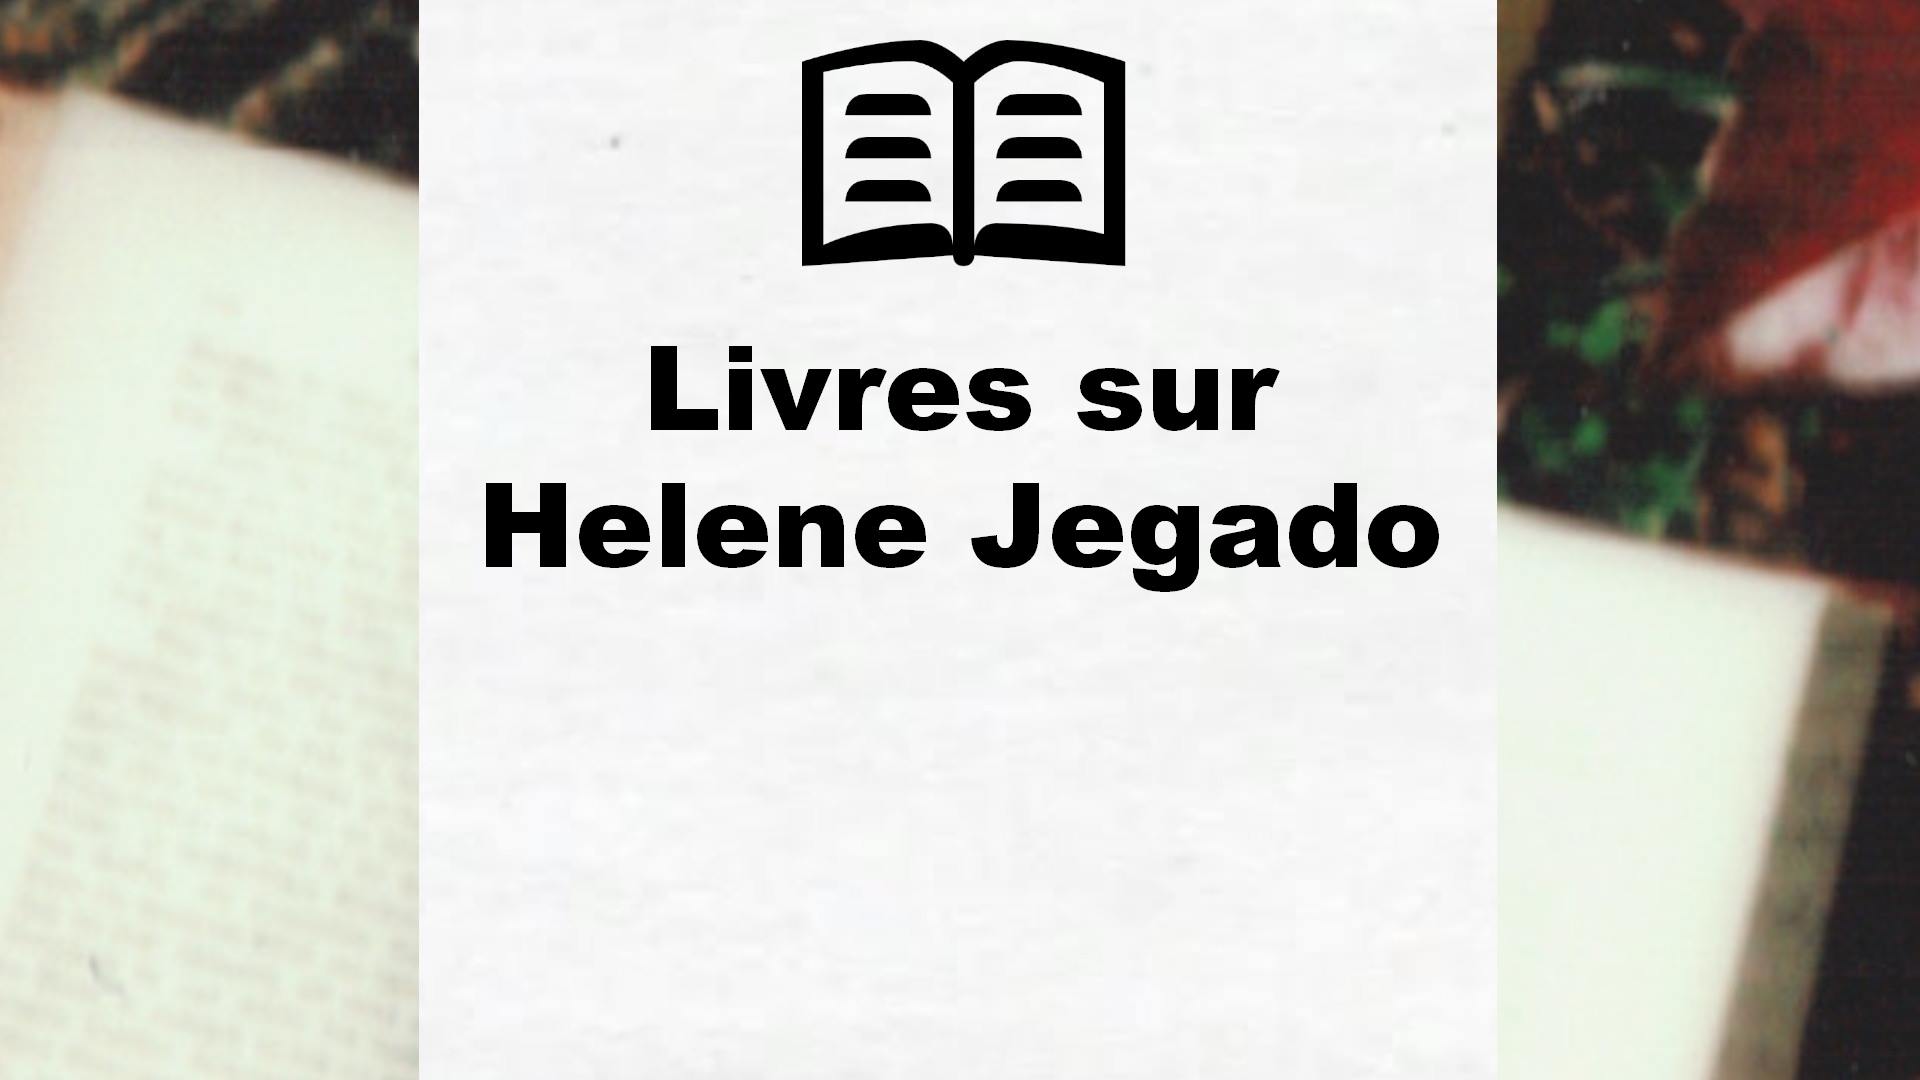 Livres sur Helene Jegado